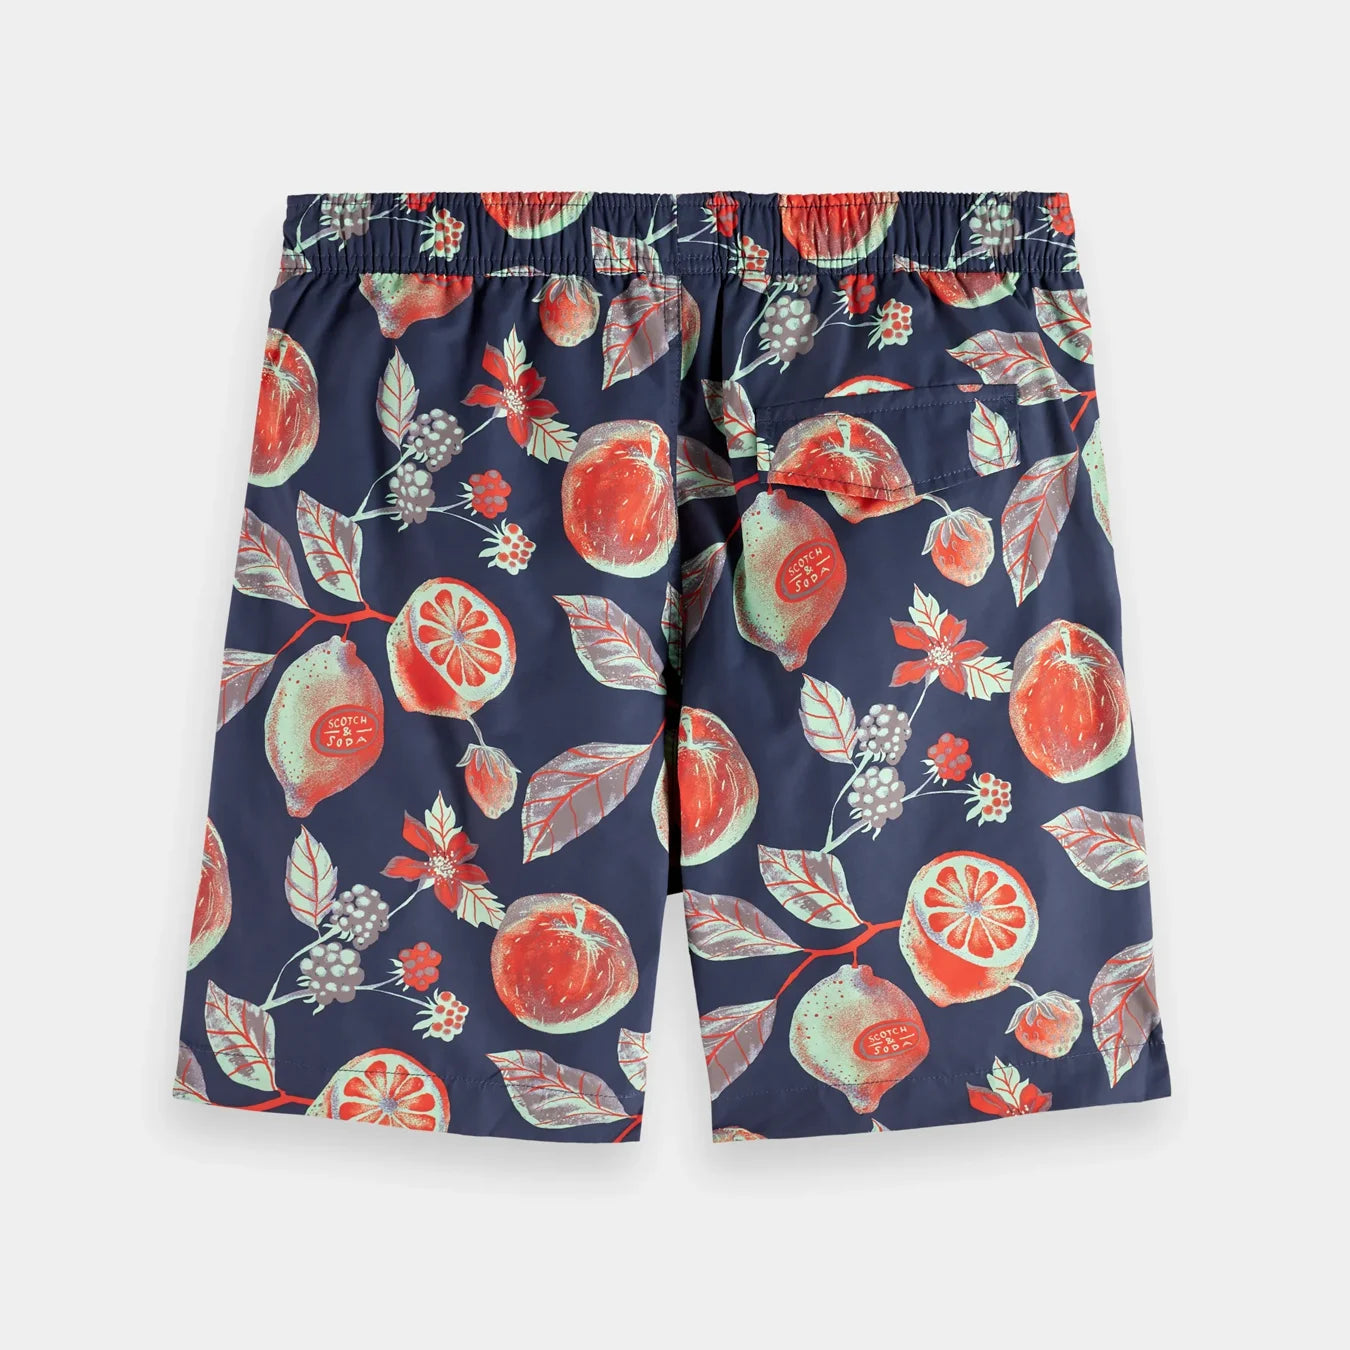 'Scotch & Soda Mid-Length Printed Swim Shorts' in 'Multi Fruits' colour